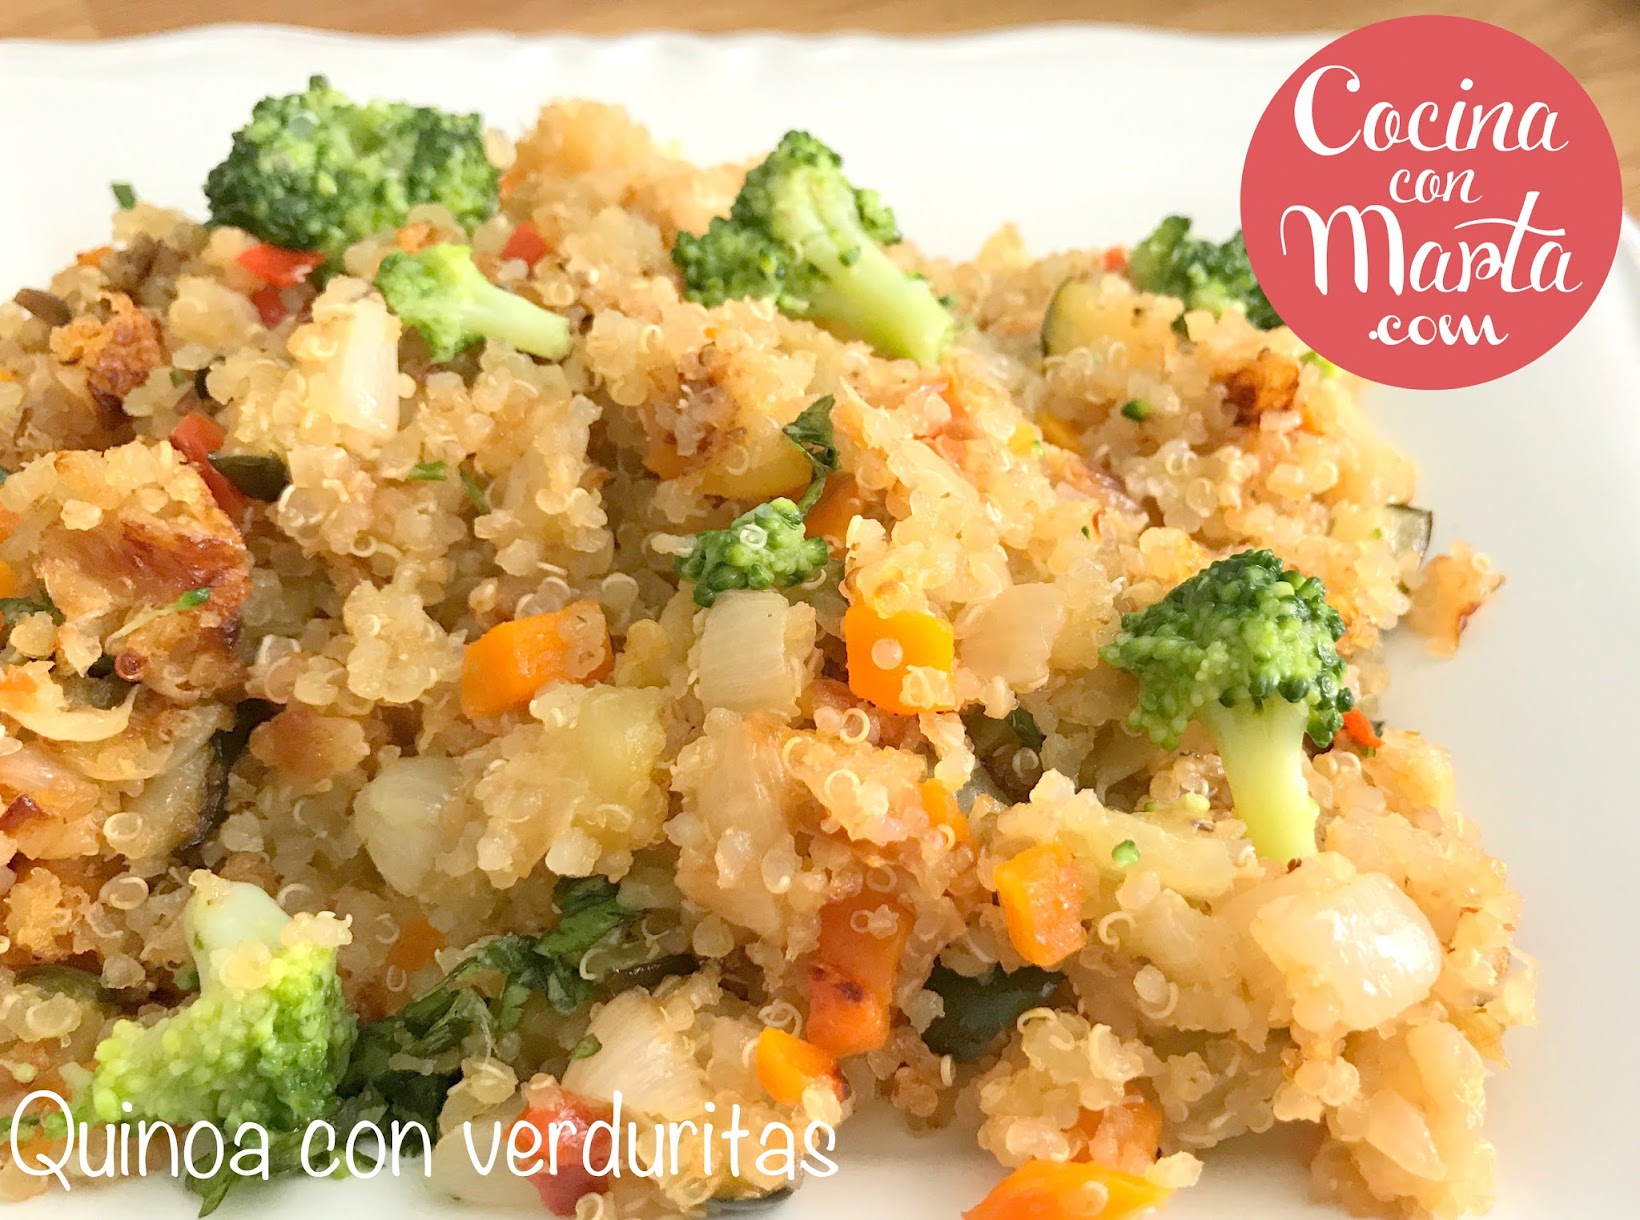 quinoa salteada con verduras, recetas con quinoa, recetas sanas, dieta, receta rápida, fácil, cocina con marta